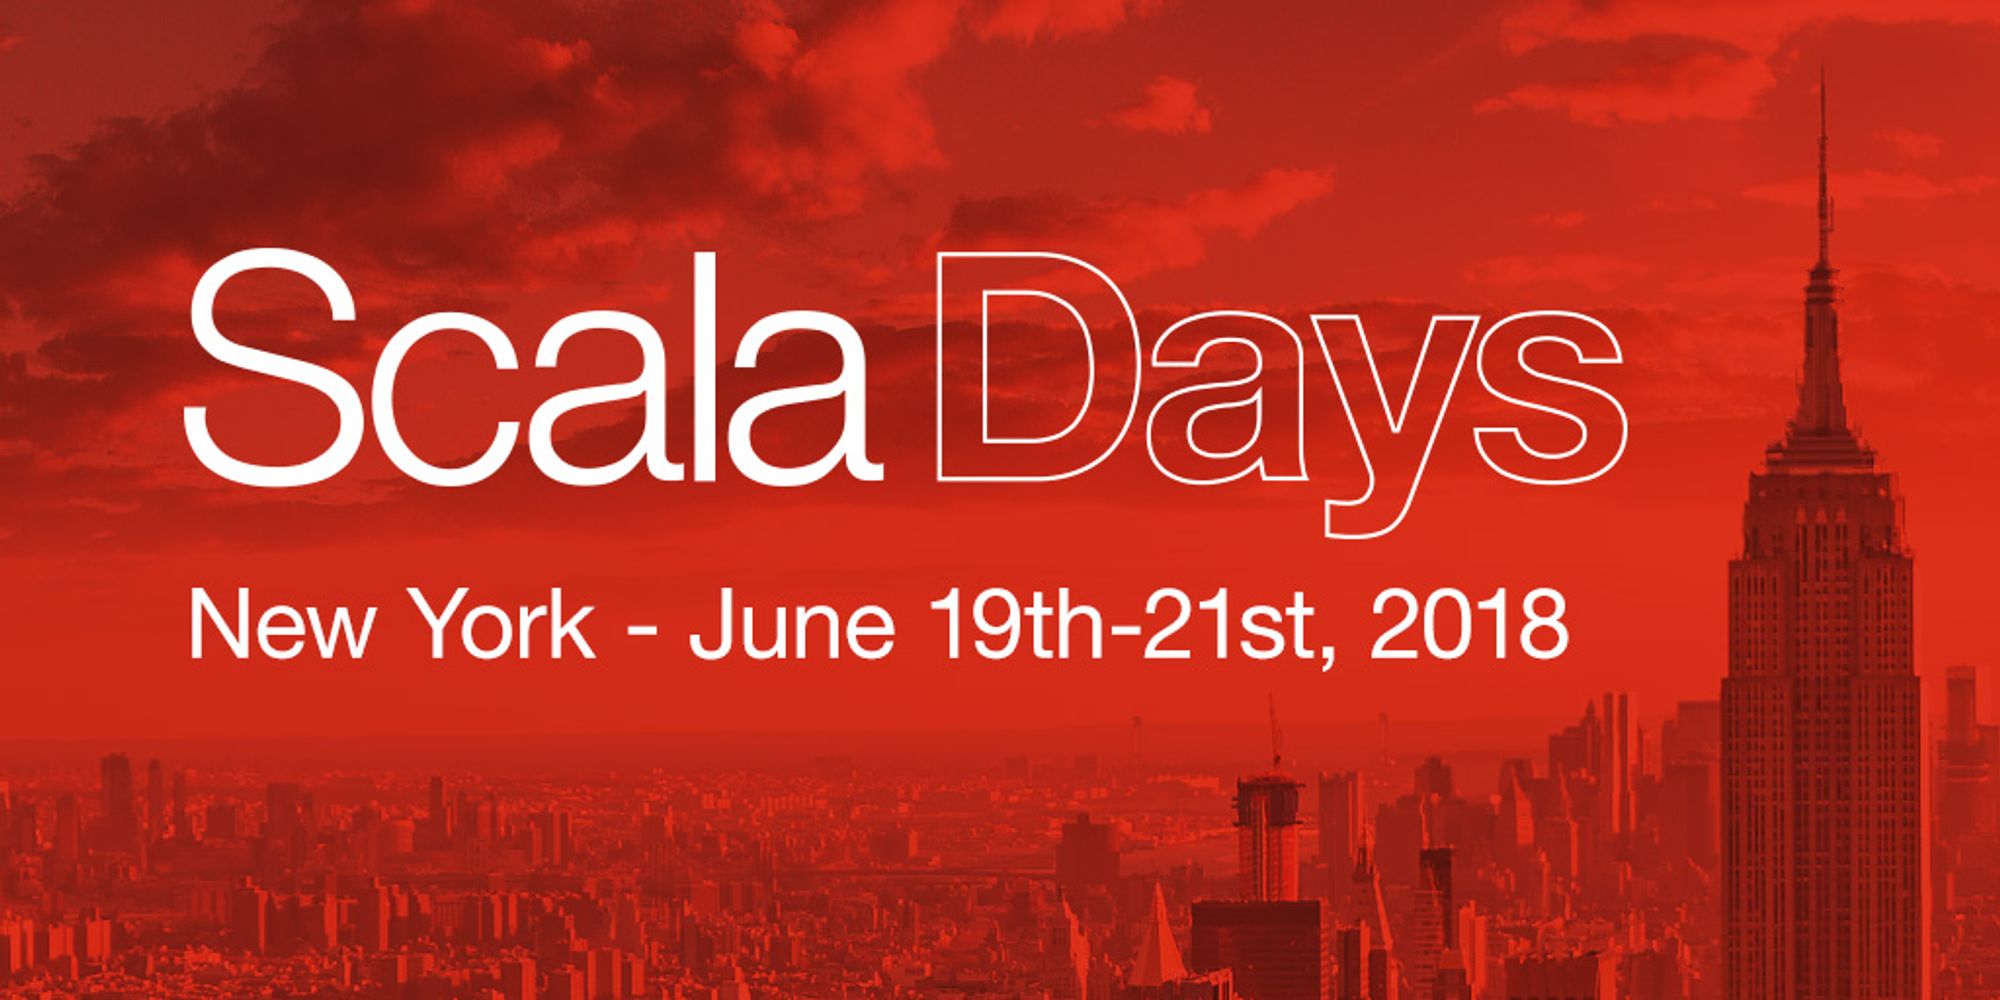 Scala Days New York 2018 Twitter